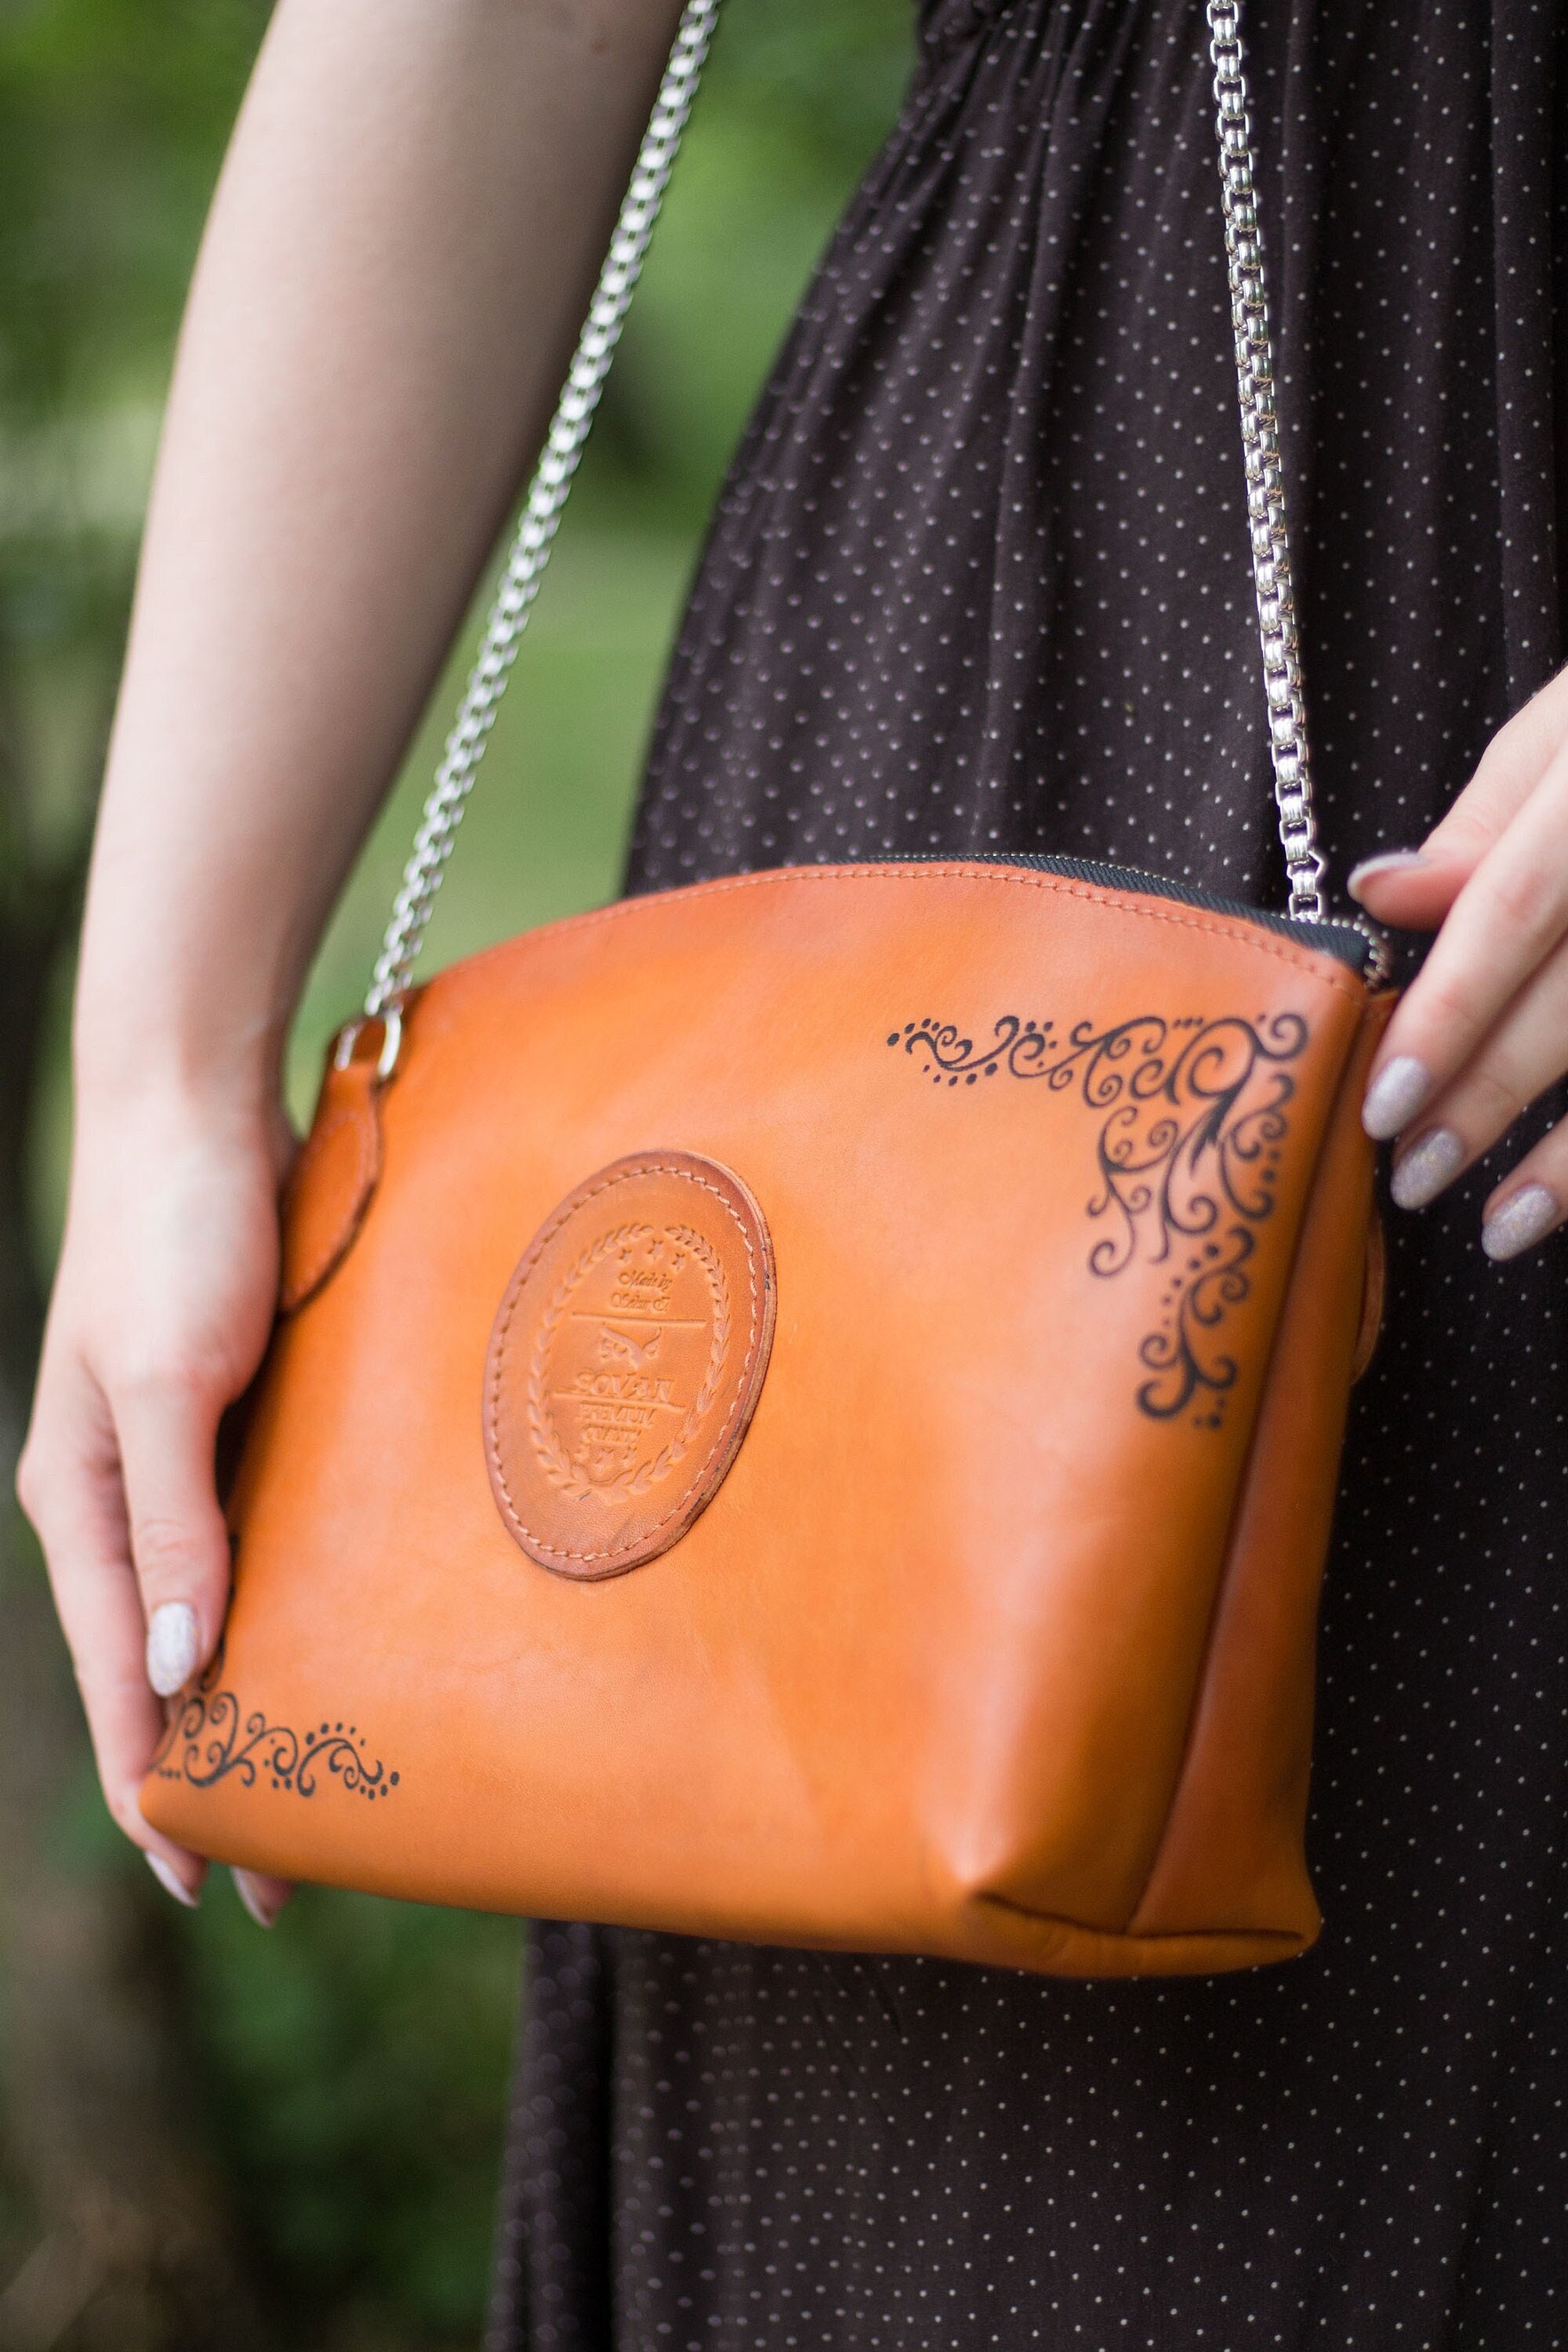 Minimalist Shoulder Bag, Women's Solid Color Crossbody Bag, Trendy